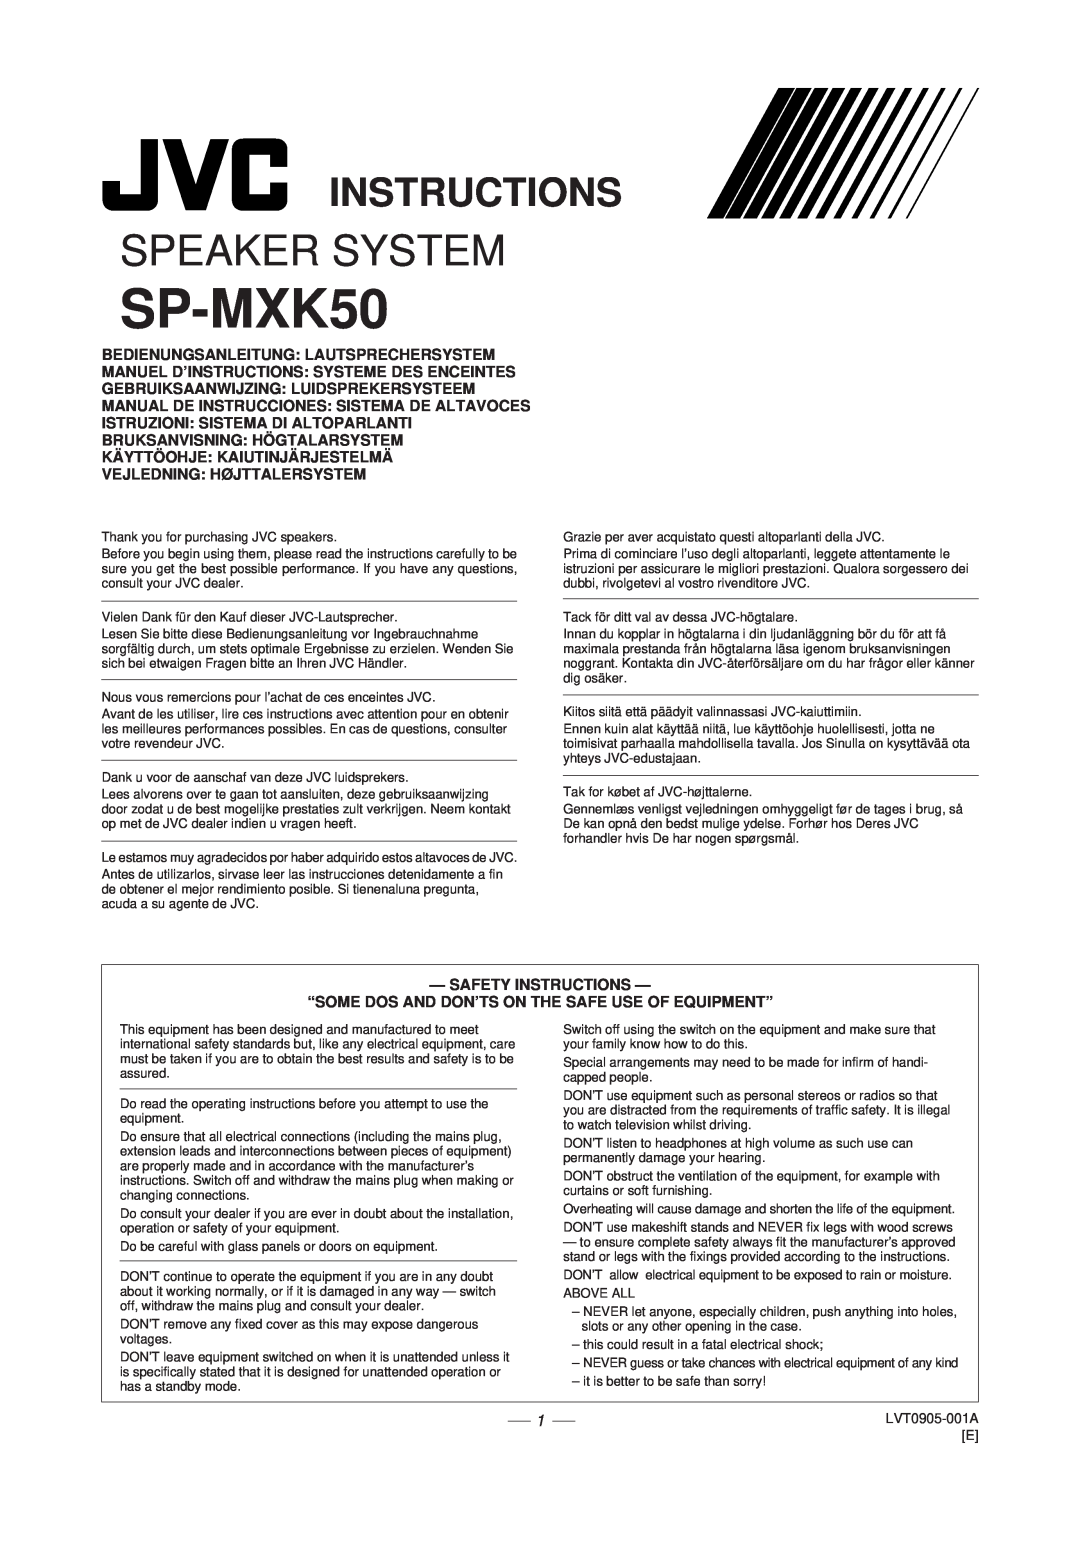 JVC CA-MXK50R manual Instructions, SP-MXK50, Speaker System 